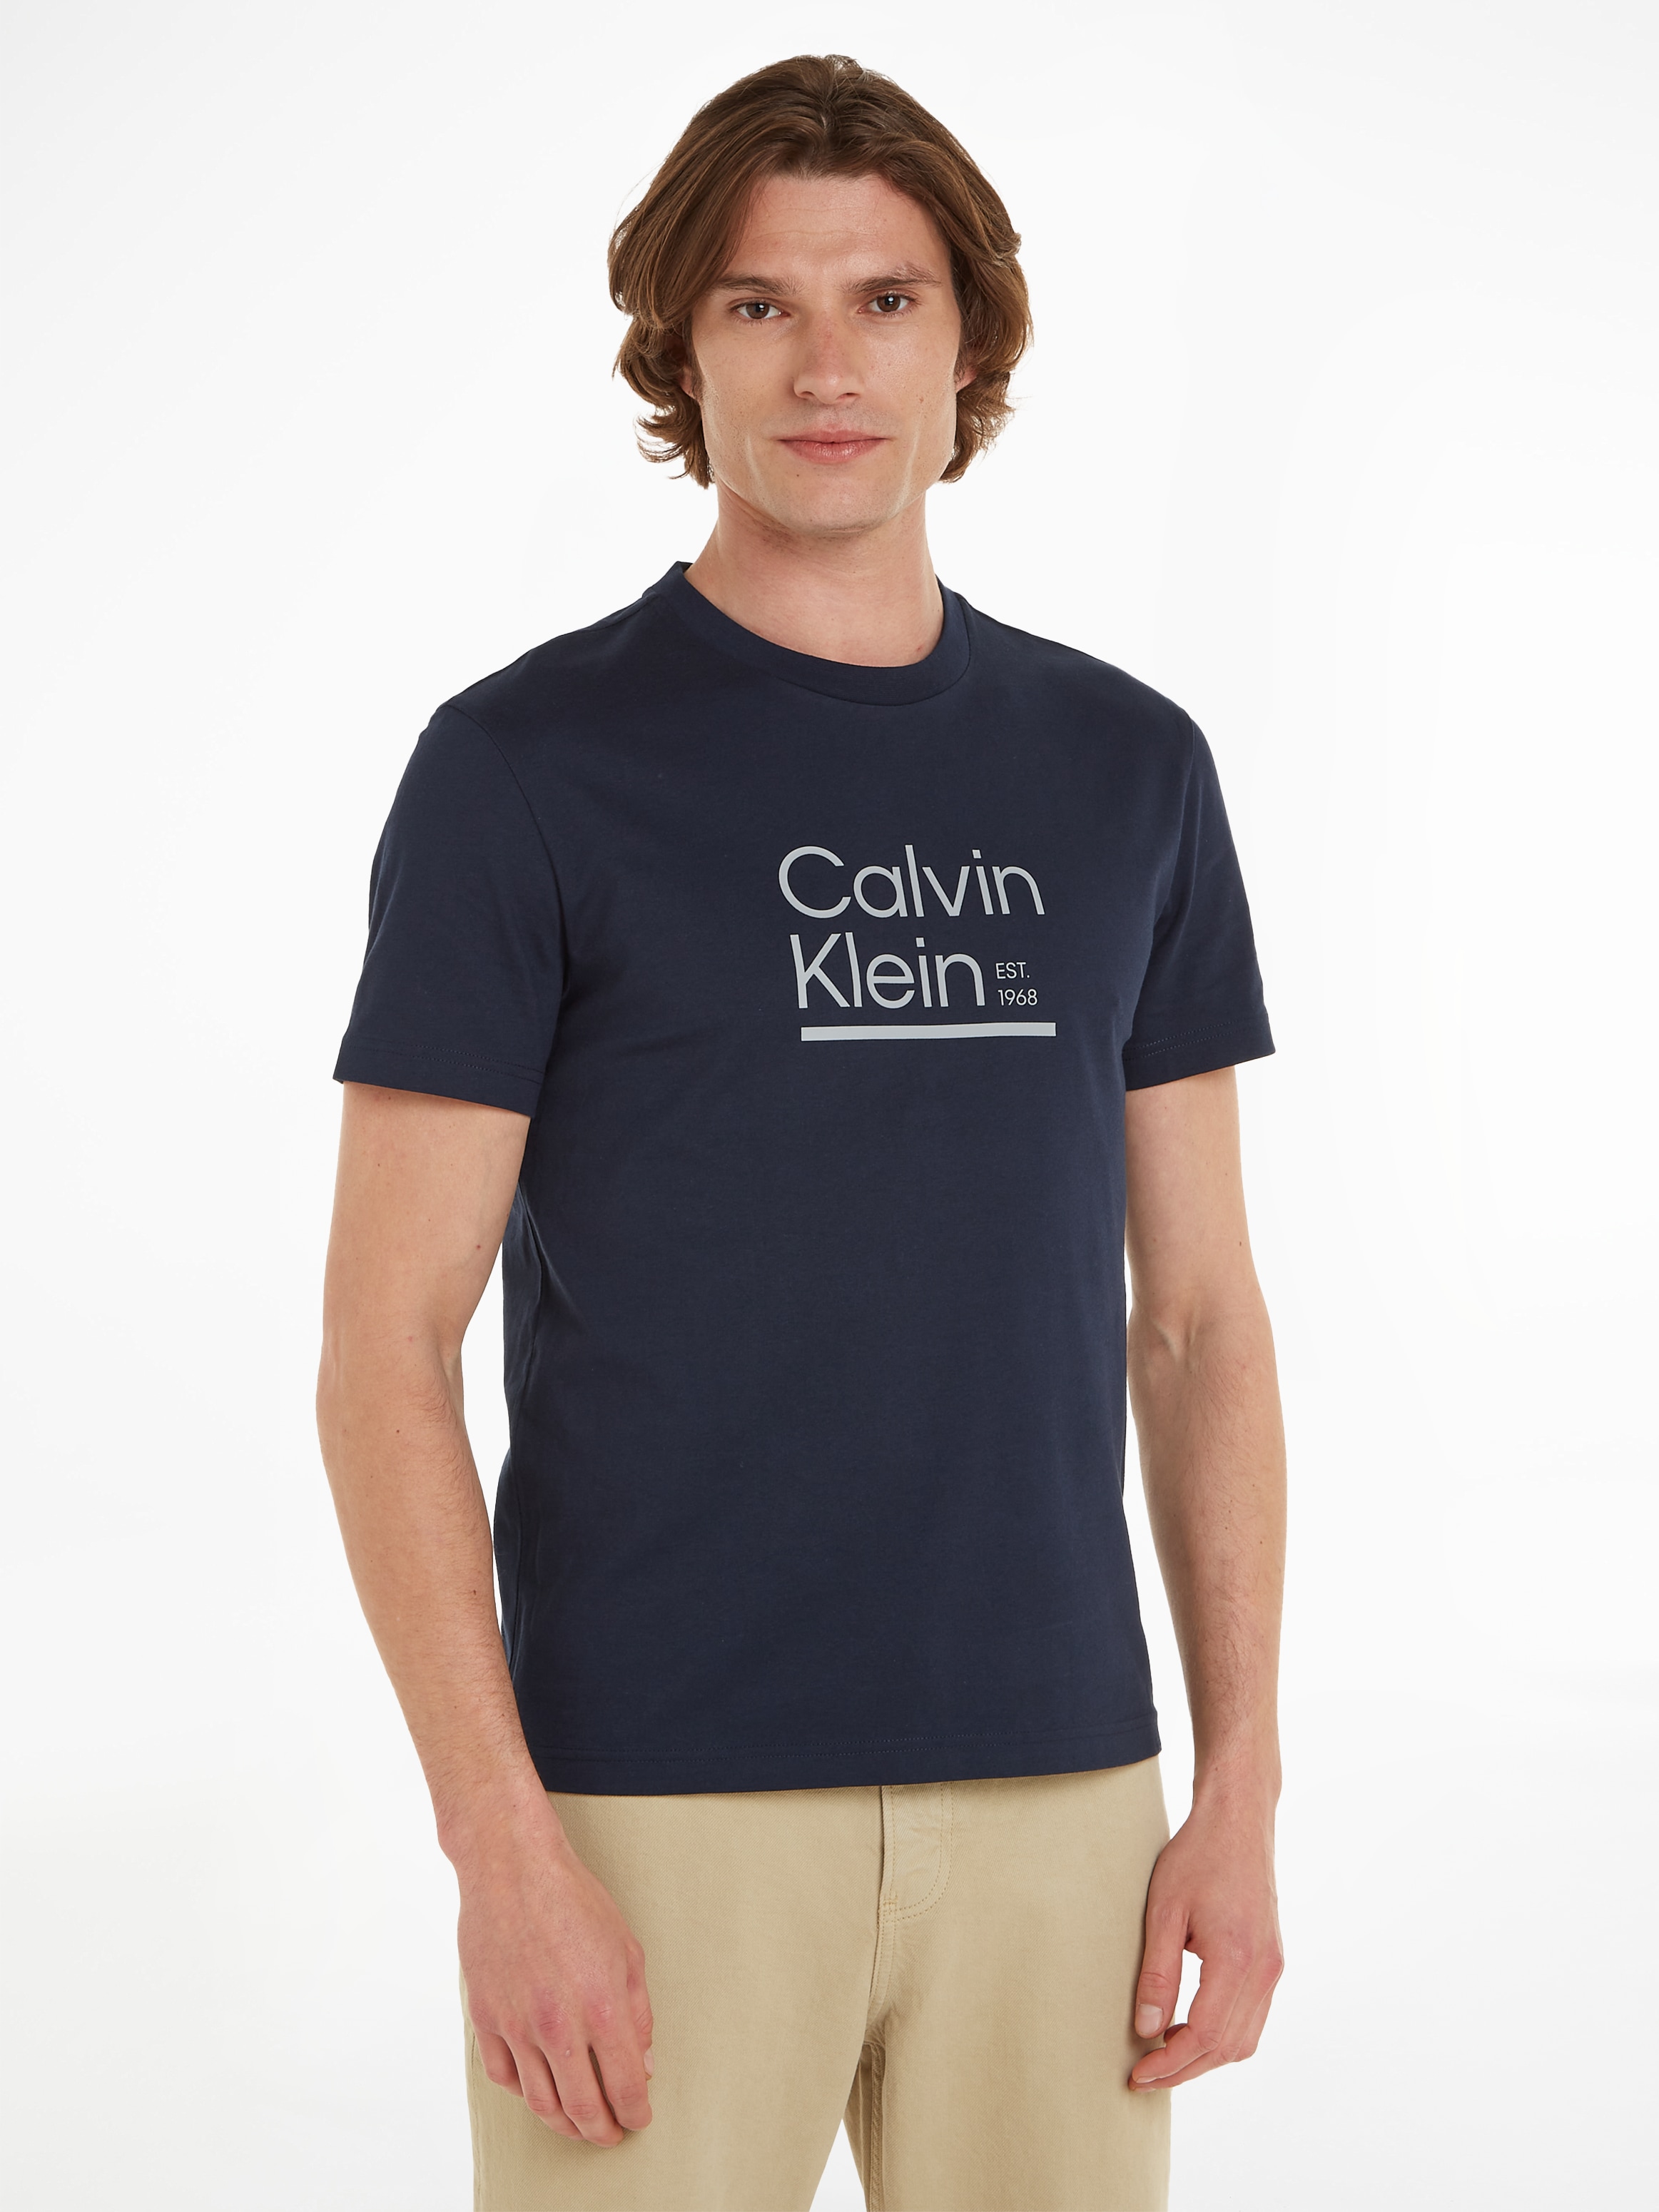 LOGO LINE CK-Logodruck T-SHIRT«, »CONTRAST Klein Calvin bei T-Shirt mit online OTTO